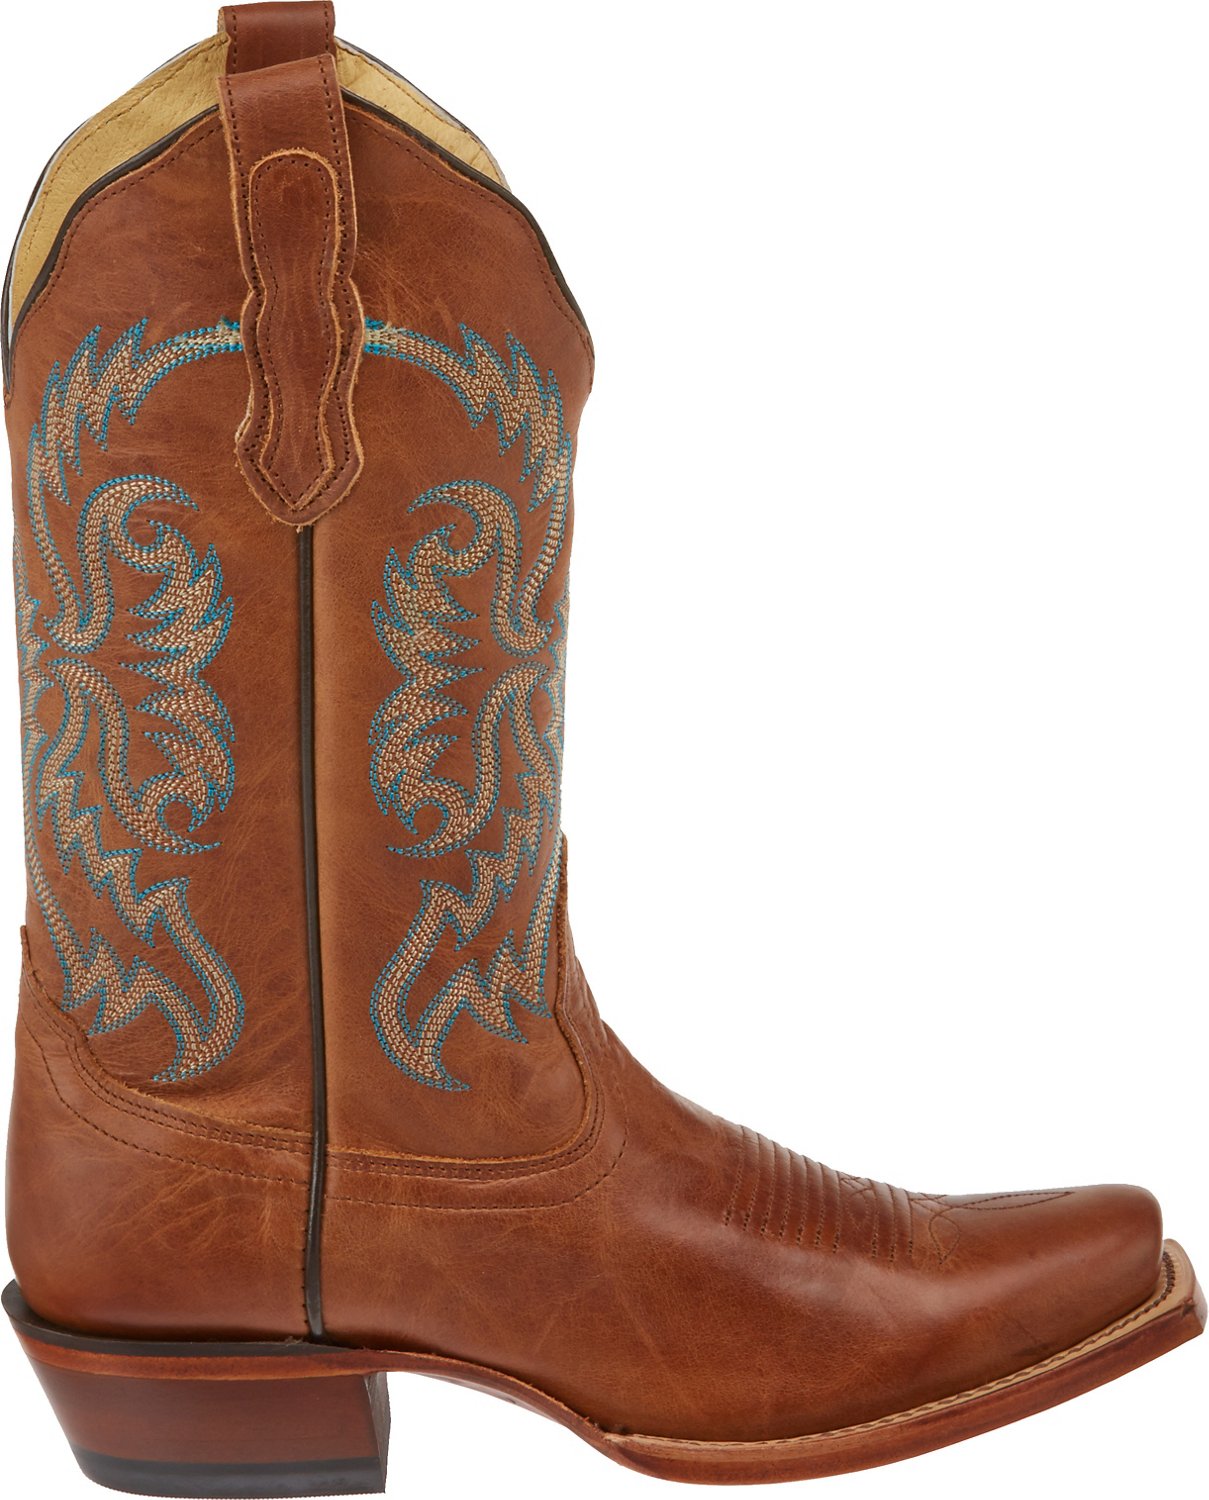 Women's Western Boots | Cowboy Boots For Women, Women's Cowboy ...